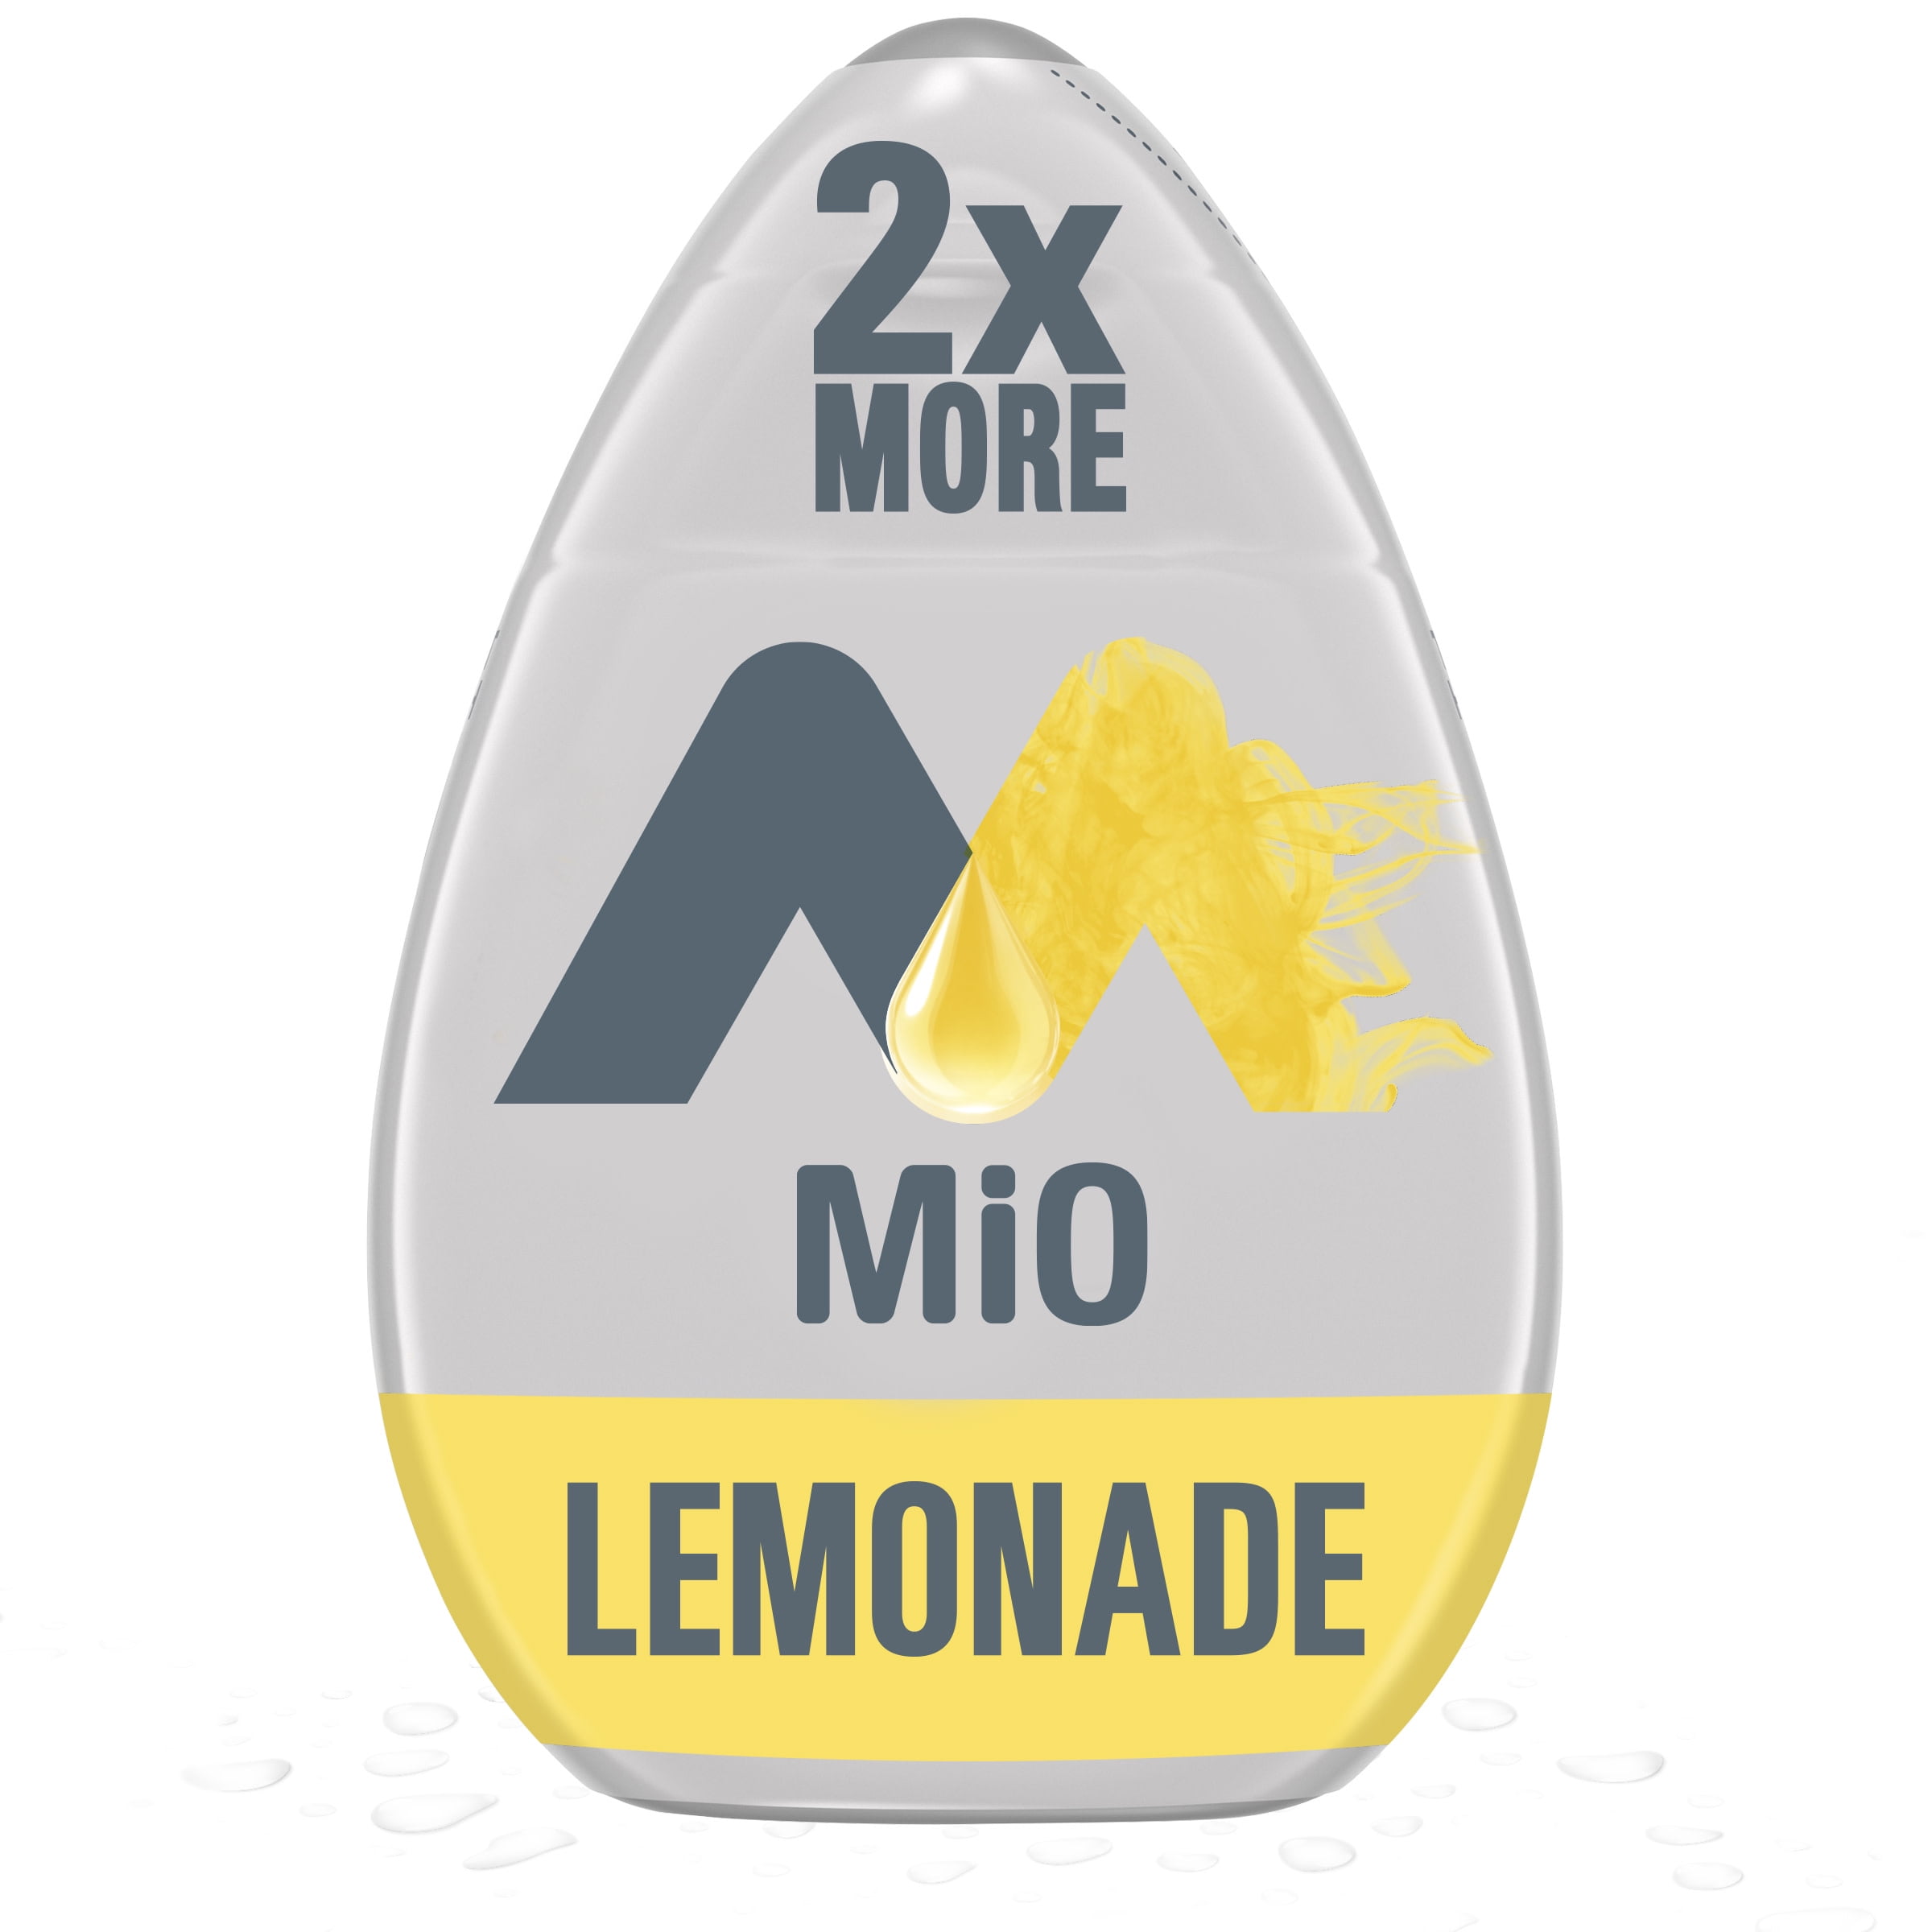 MiO Lemonade Sugar Free Water Enhancer with 2X More, 3.24 fl oz Big Bottle